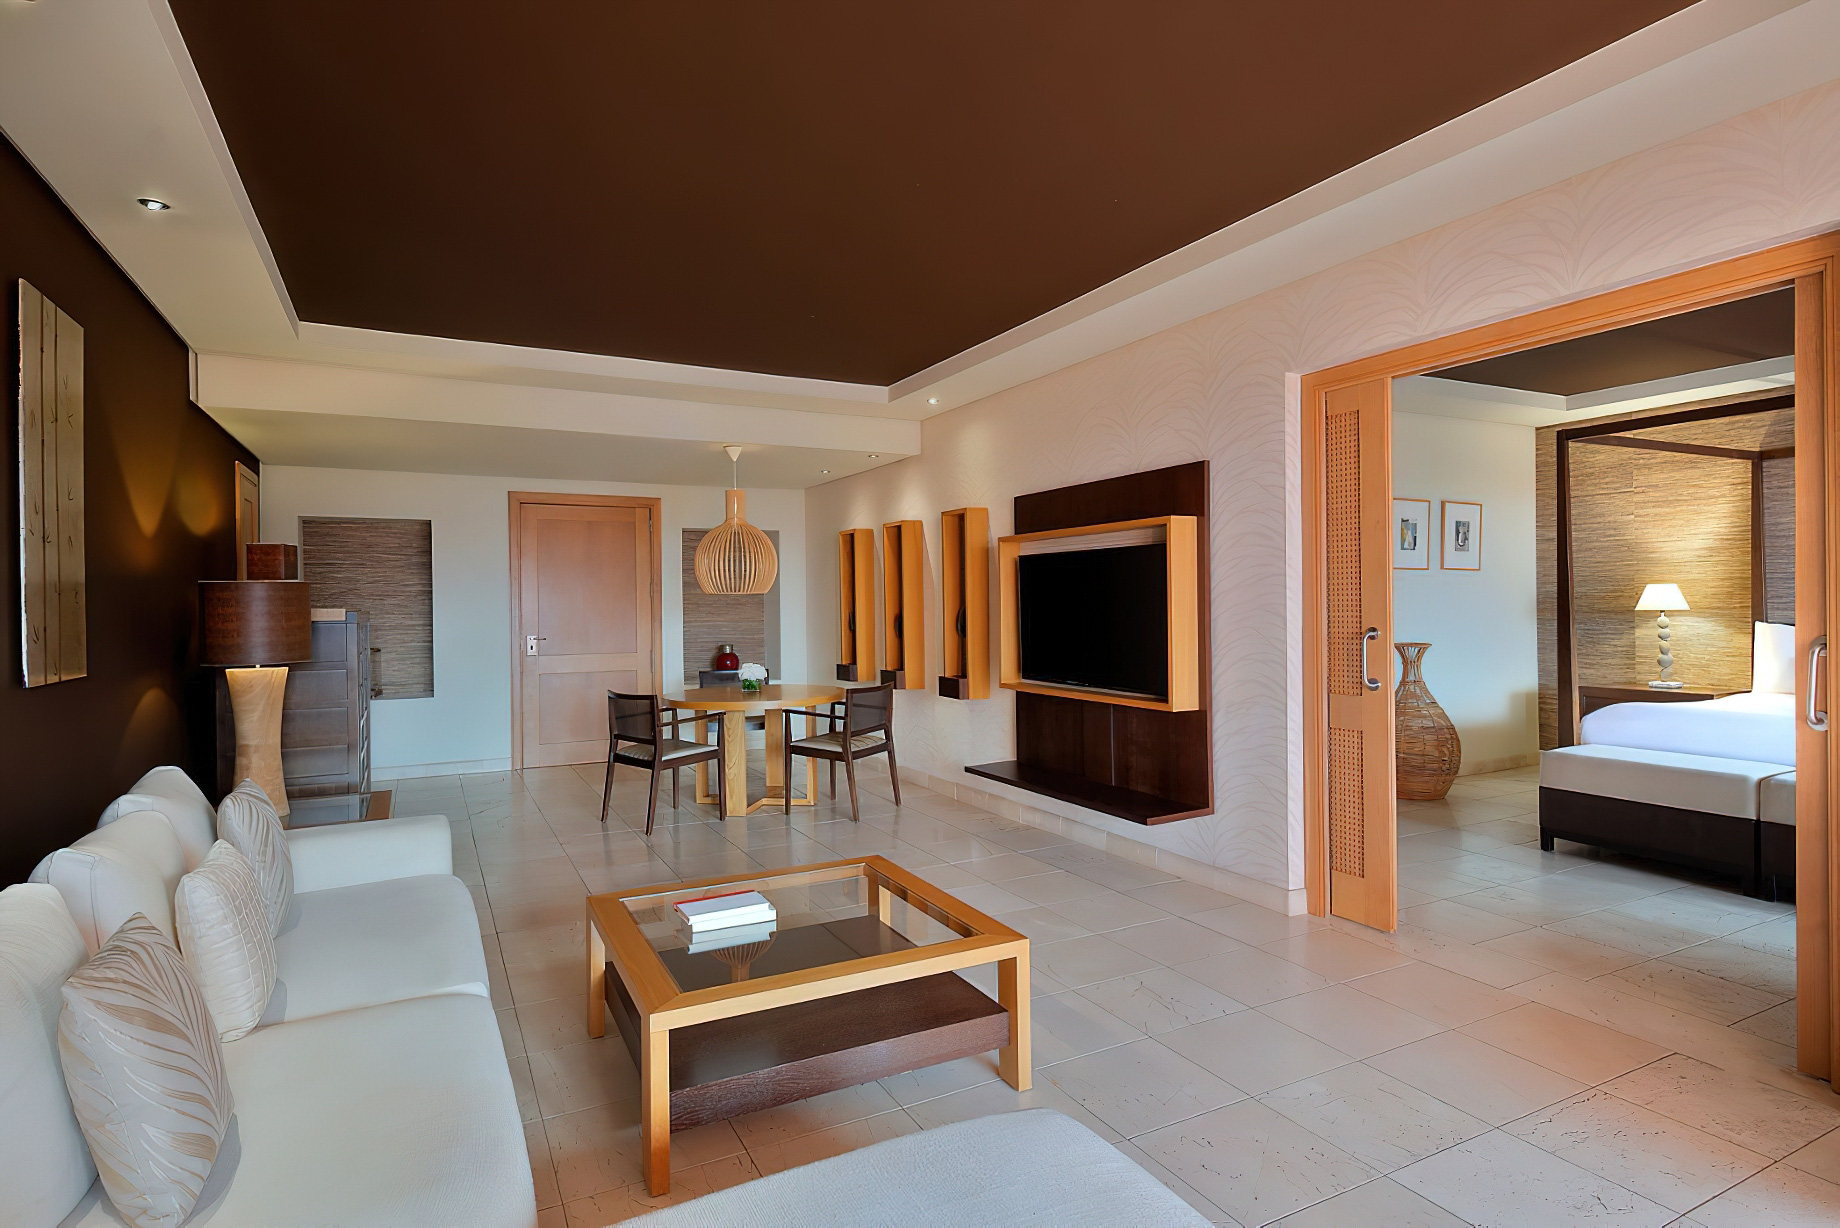 The Ritz-Carlton, Abama Resort - Santa Cruz de Tenerife, Spain - Citadel One Bedroom Suite